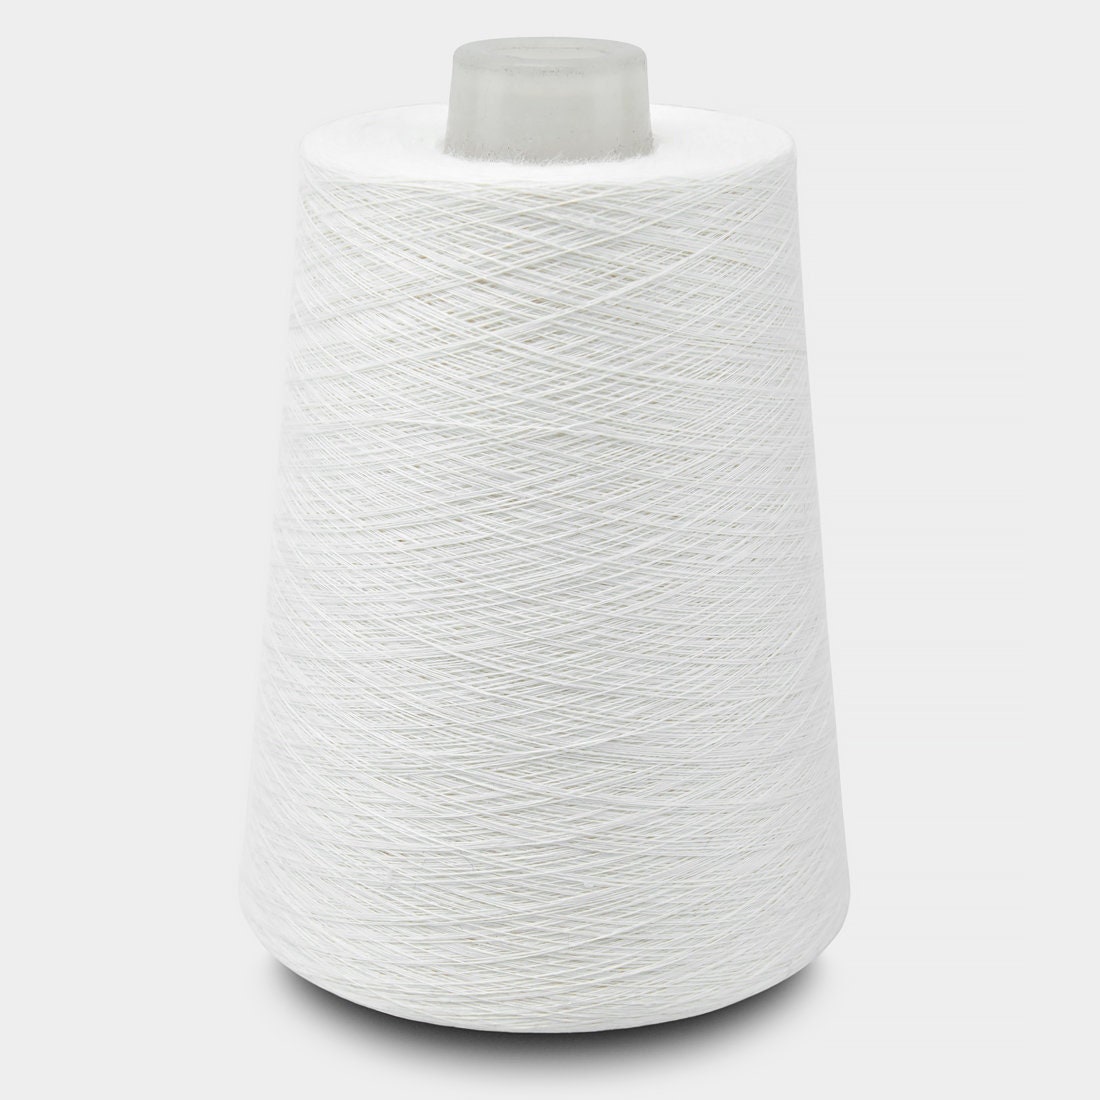 Buy Wholesale China Wholesale High Quality Milk Cotton Yarn 4ply Acrylic  Hand Knitting Yarn For Crochet & Cotton Yarn at USD 0.3